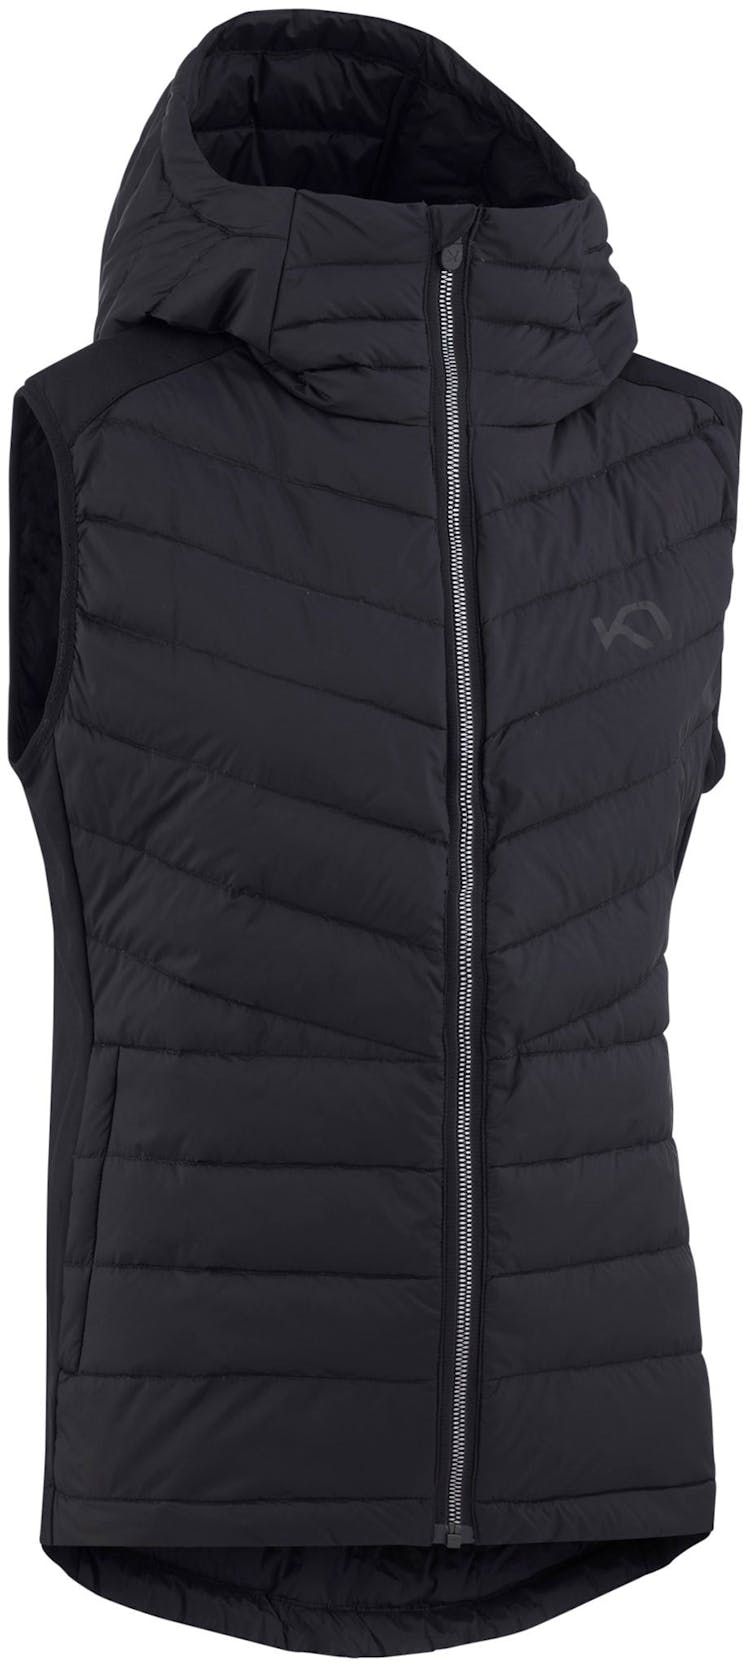 Product gallery image number 1 for product Eva Hybrid Vest Sleeveless - Women's